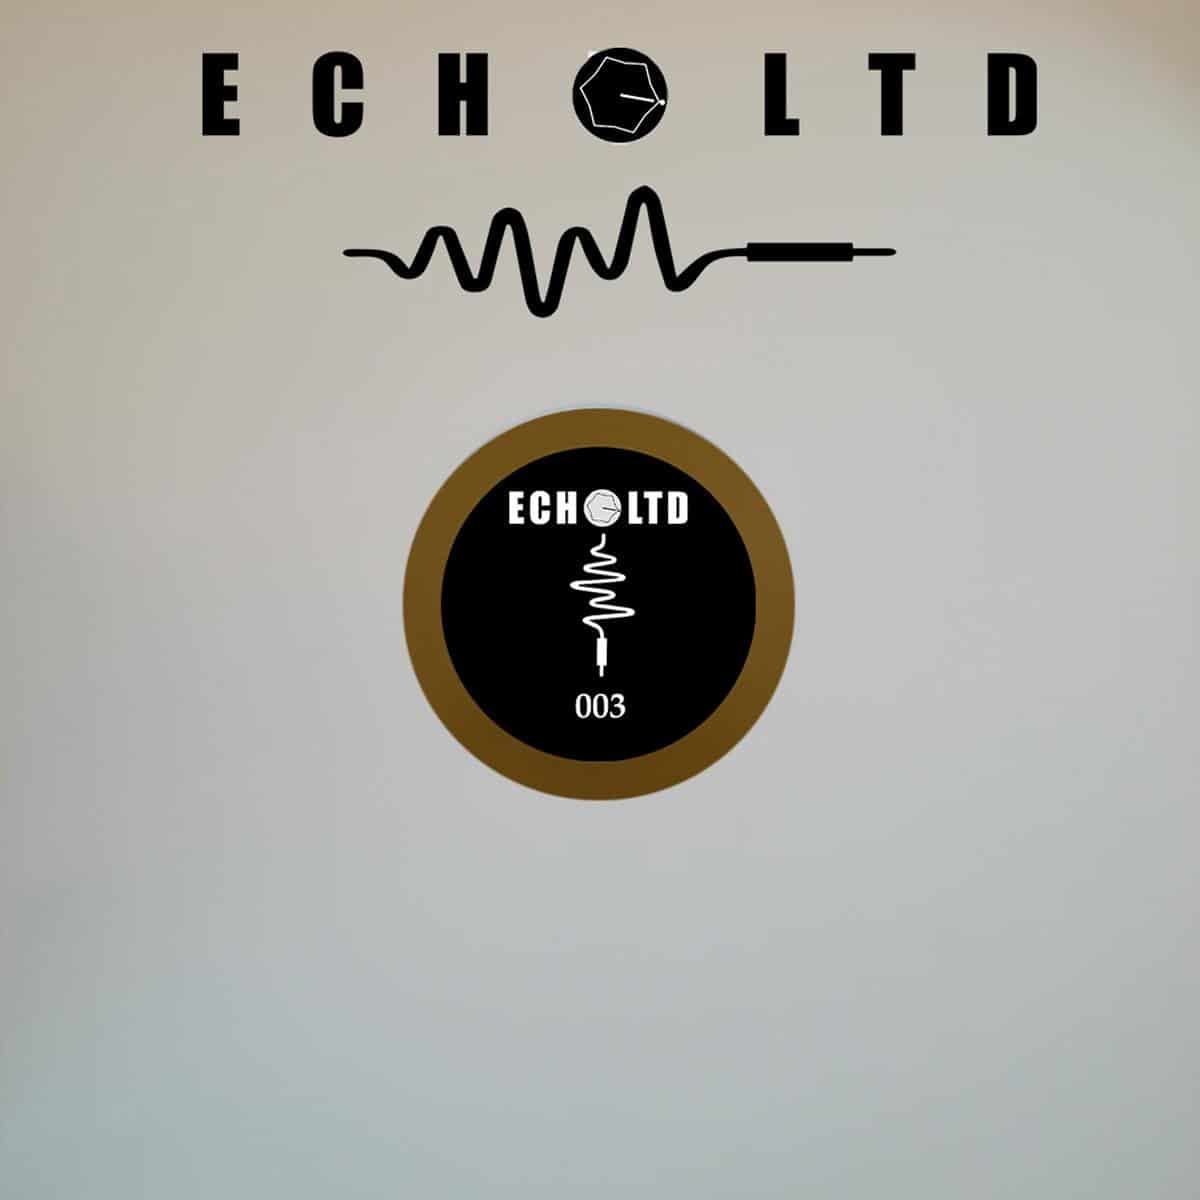 SND/RTN - Echo LTD 003 - ECHOLTD003 - ECHO LTD